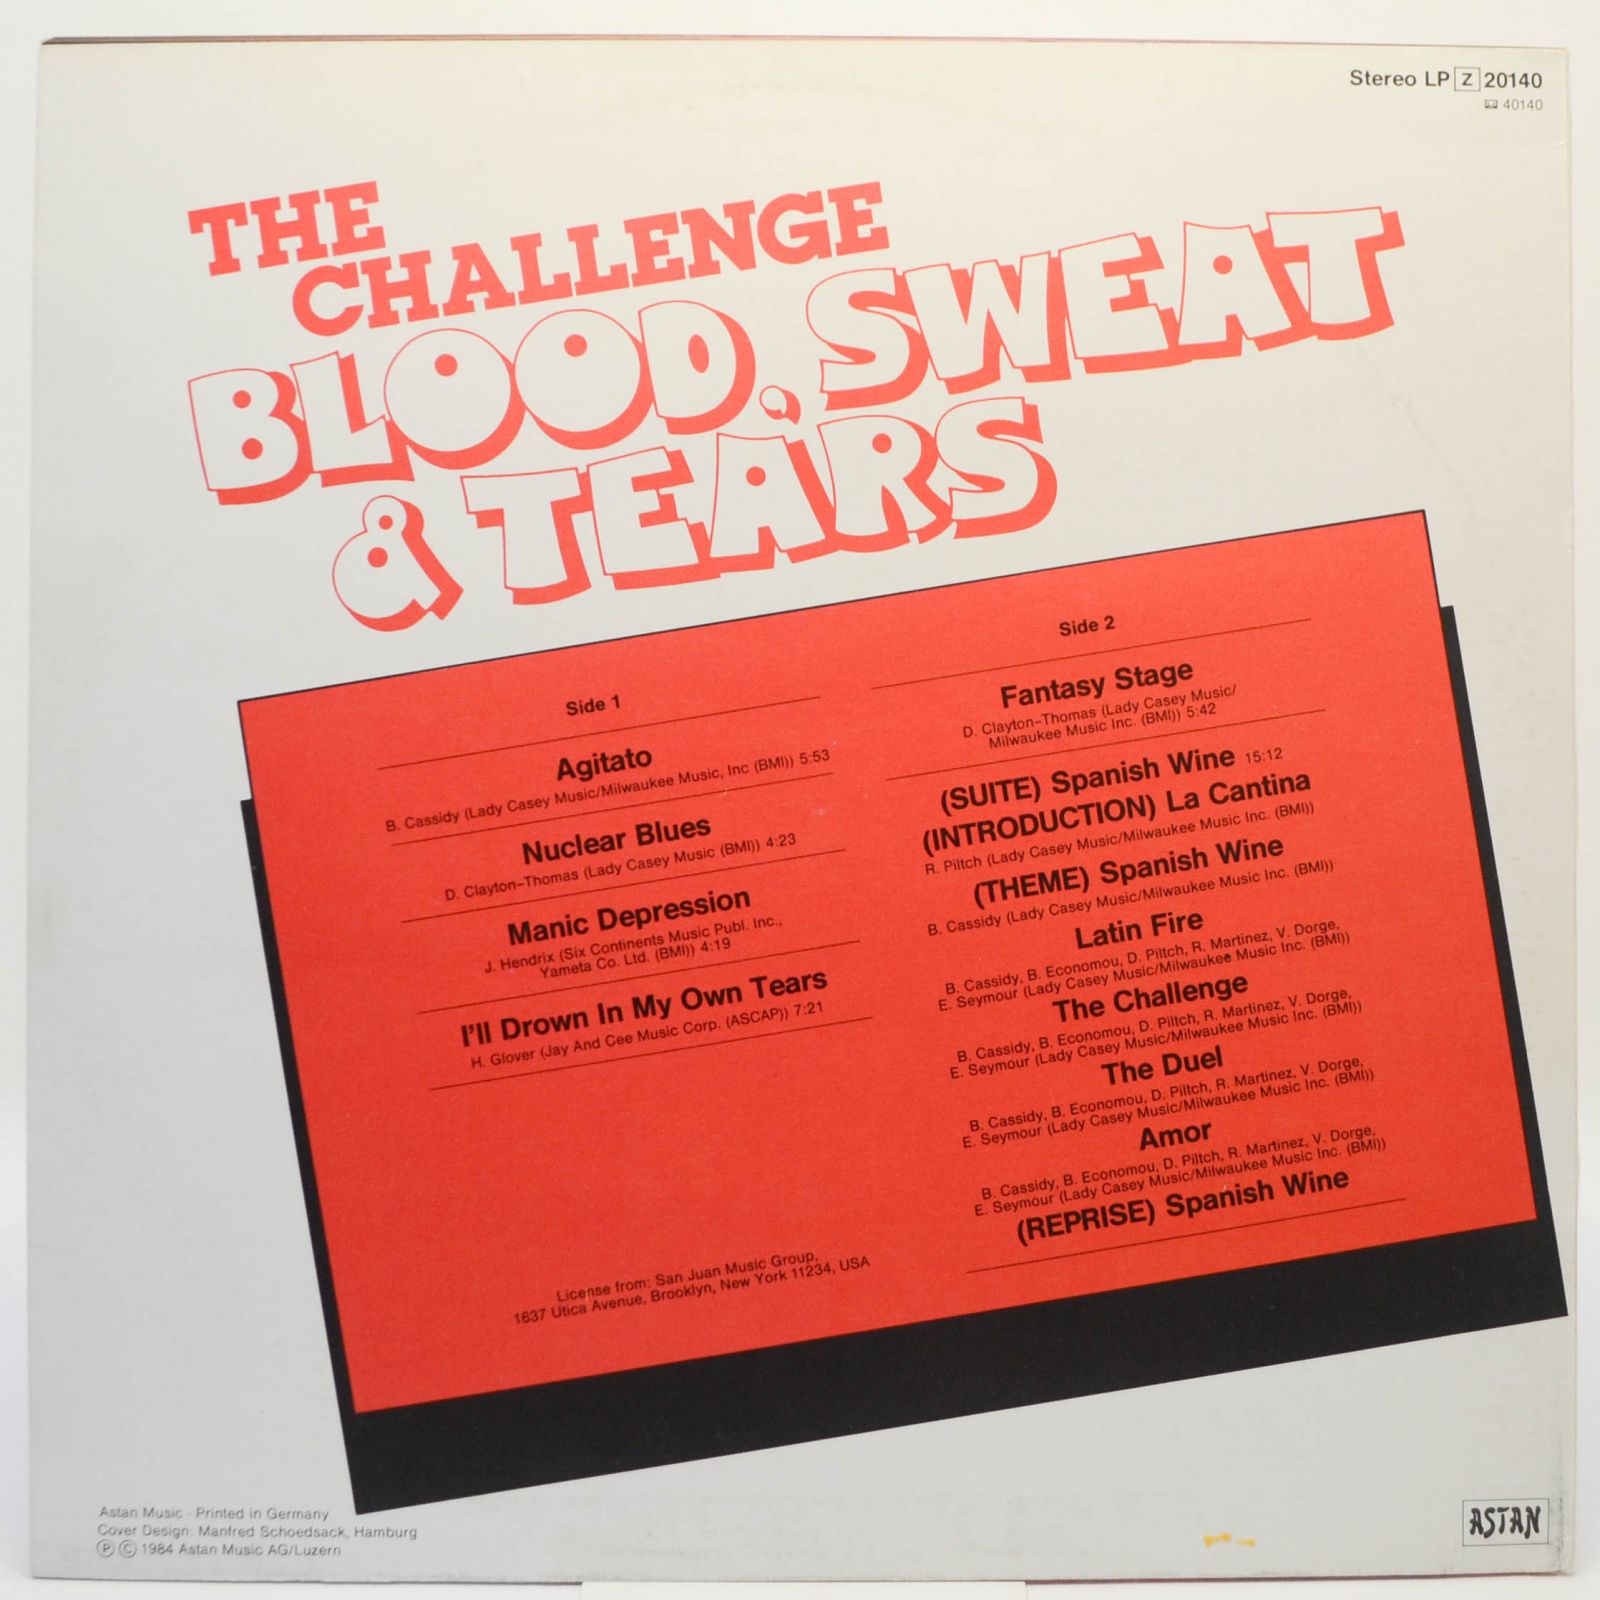 Blood, Sweat & Tears — The Challenge, 1984